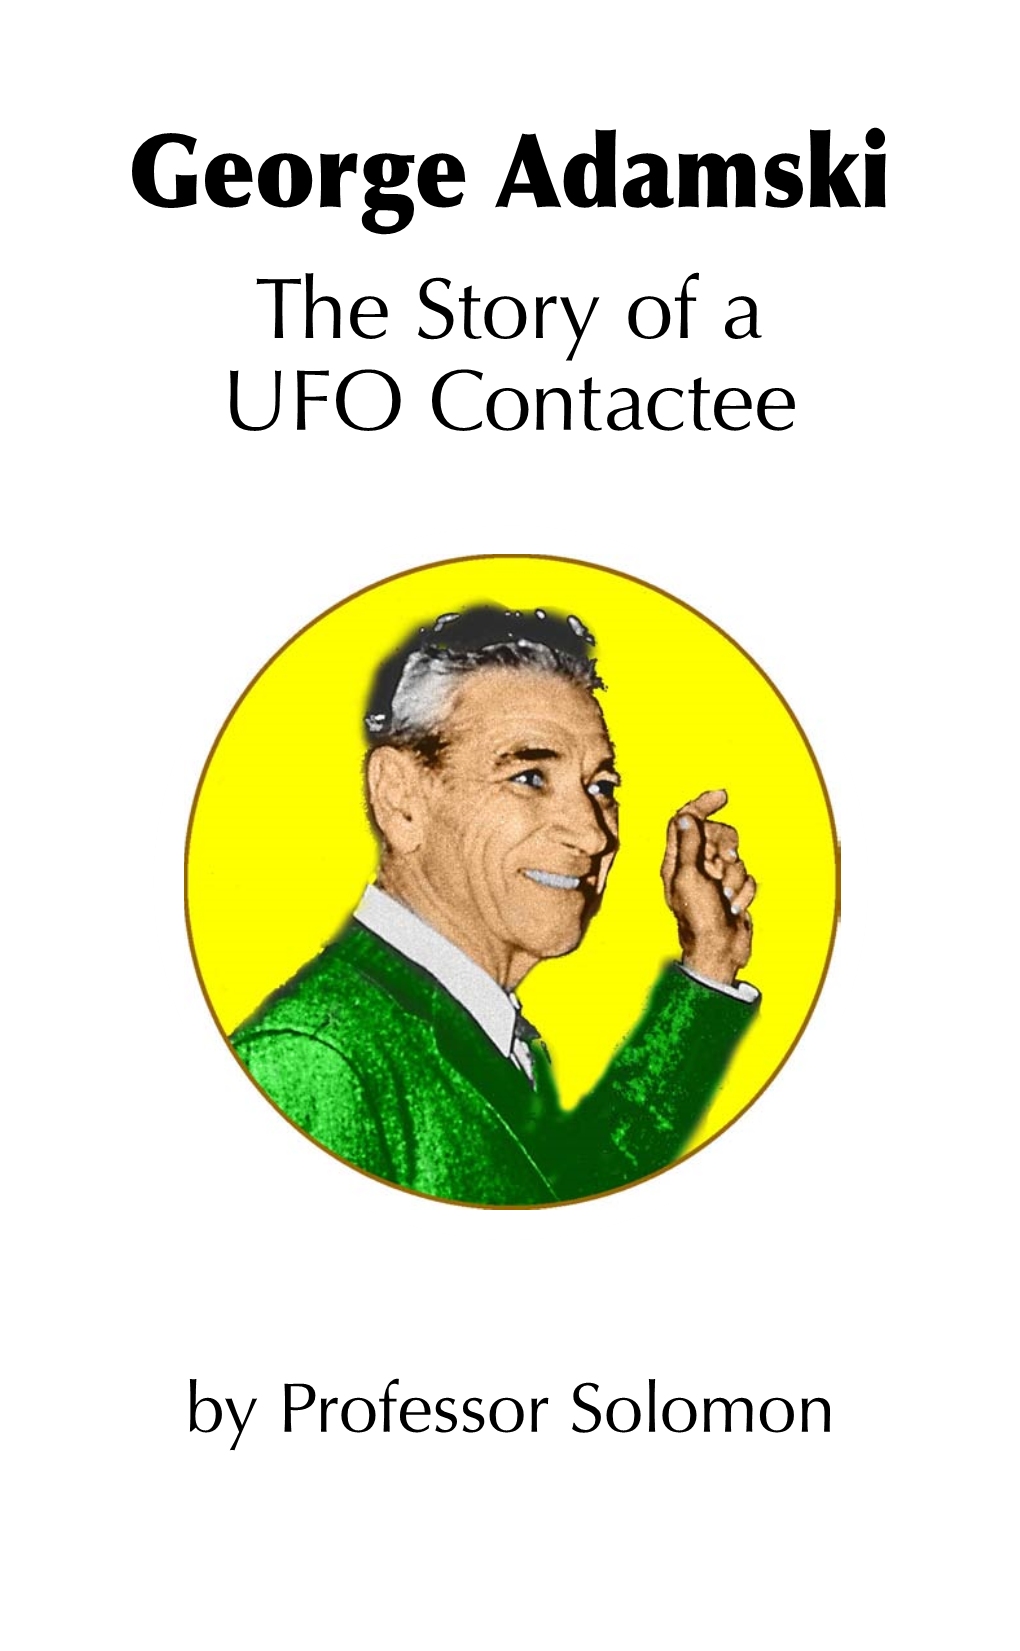 George Adamski the Story of a UFO Contactee